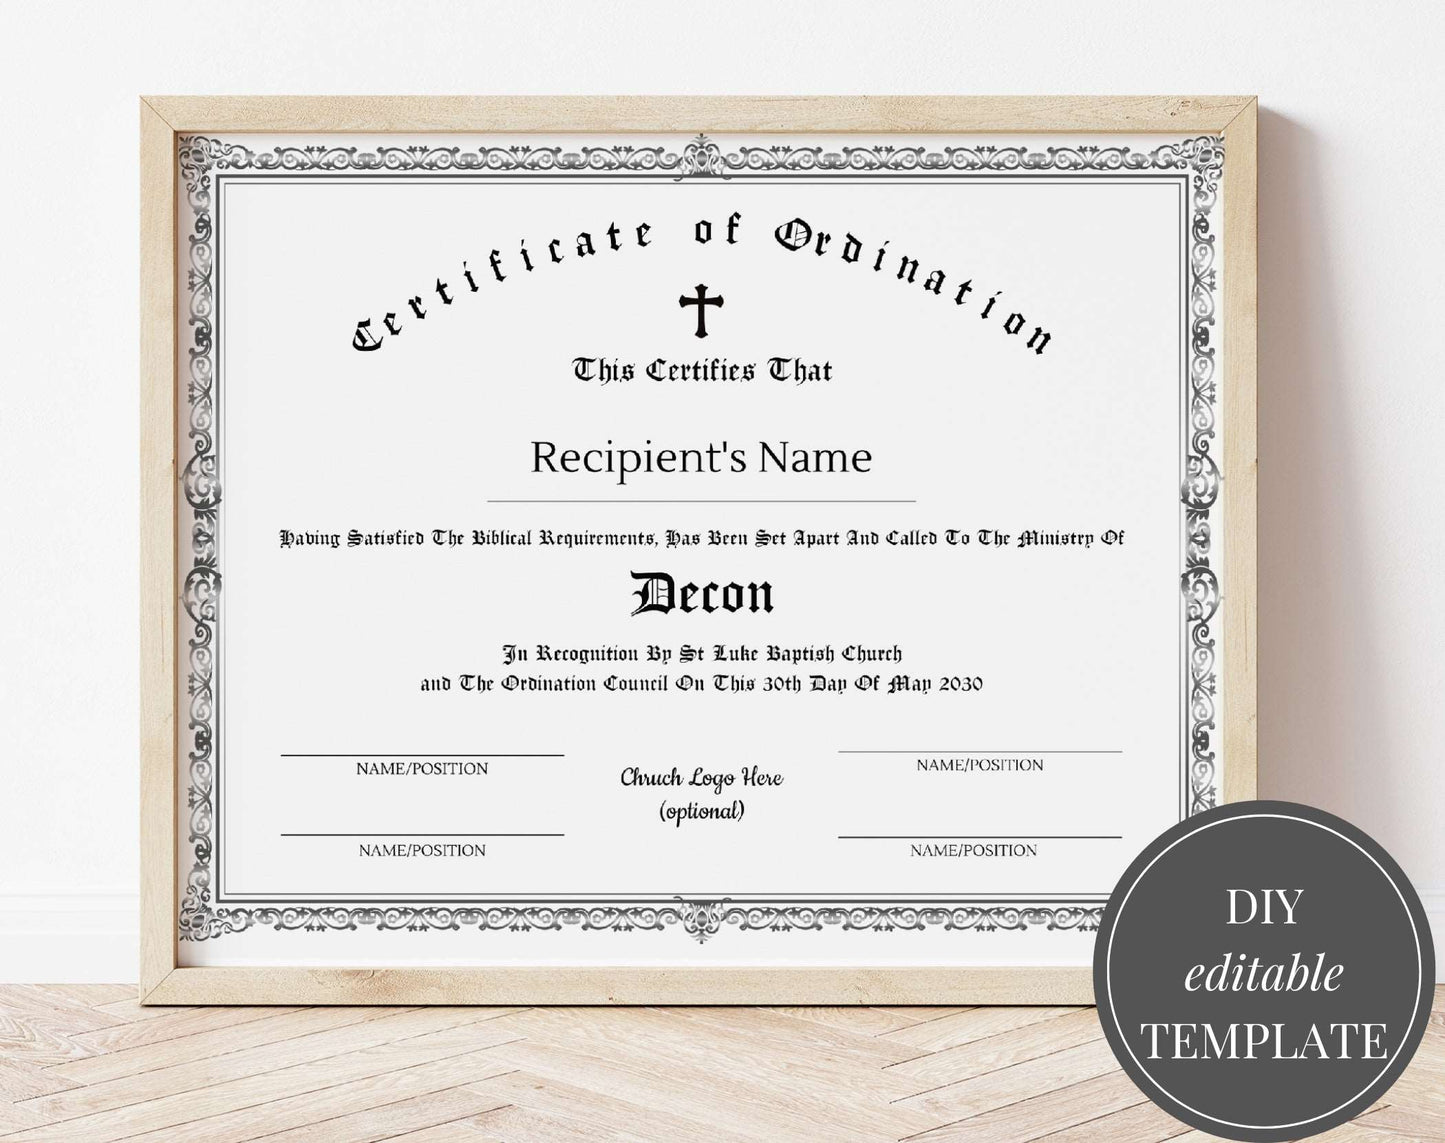 Editatable Printable Certificate of ordination template